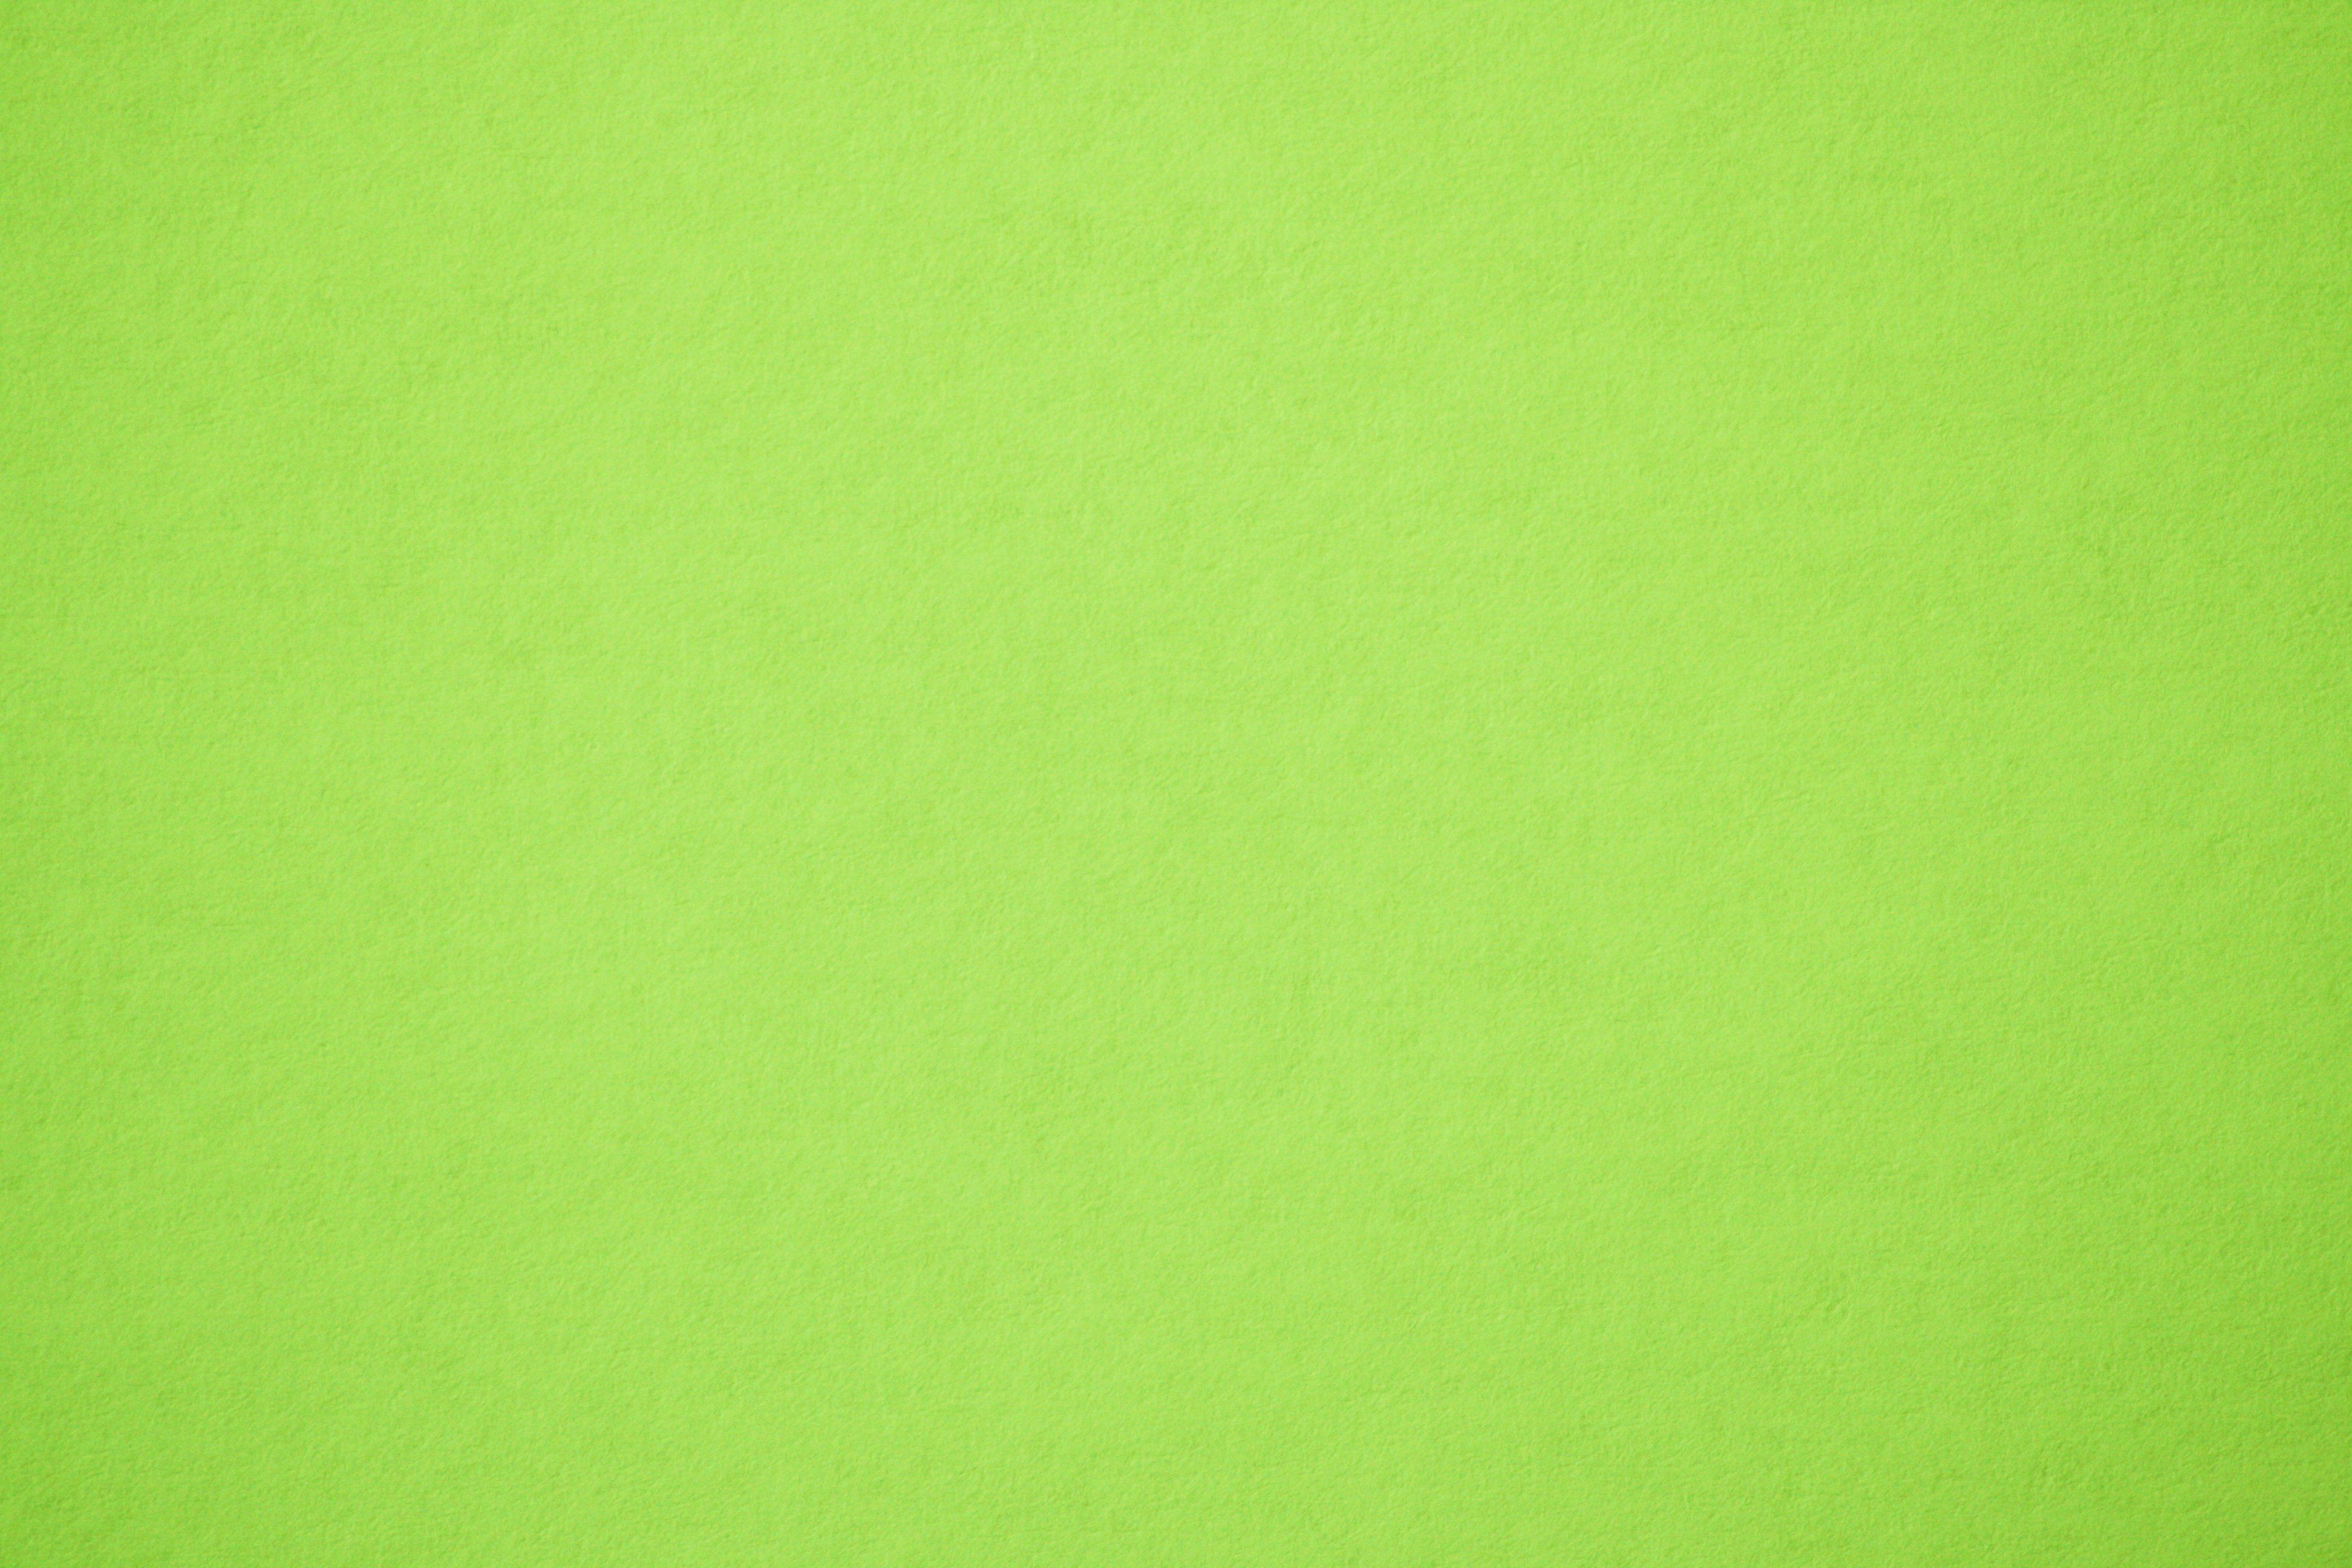 Best Of 20 Images For Light Green Paint Colors - Billion Estates | 25288